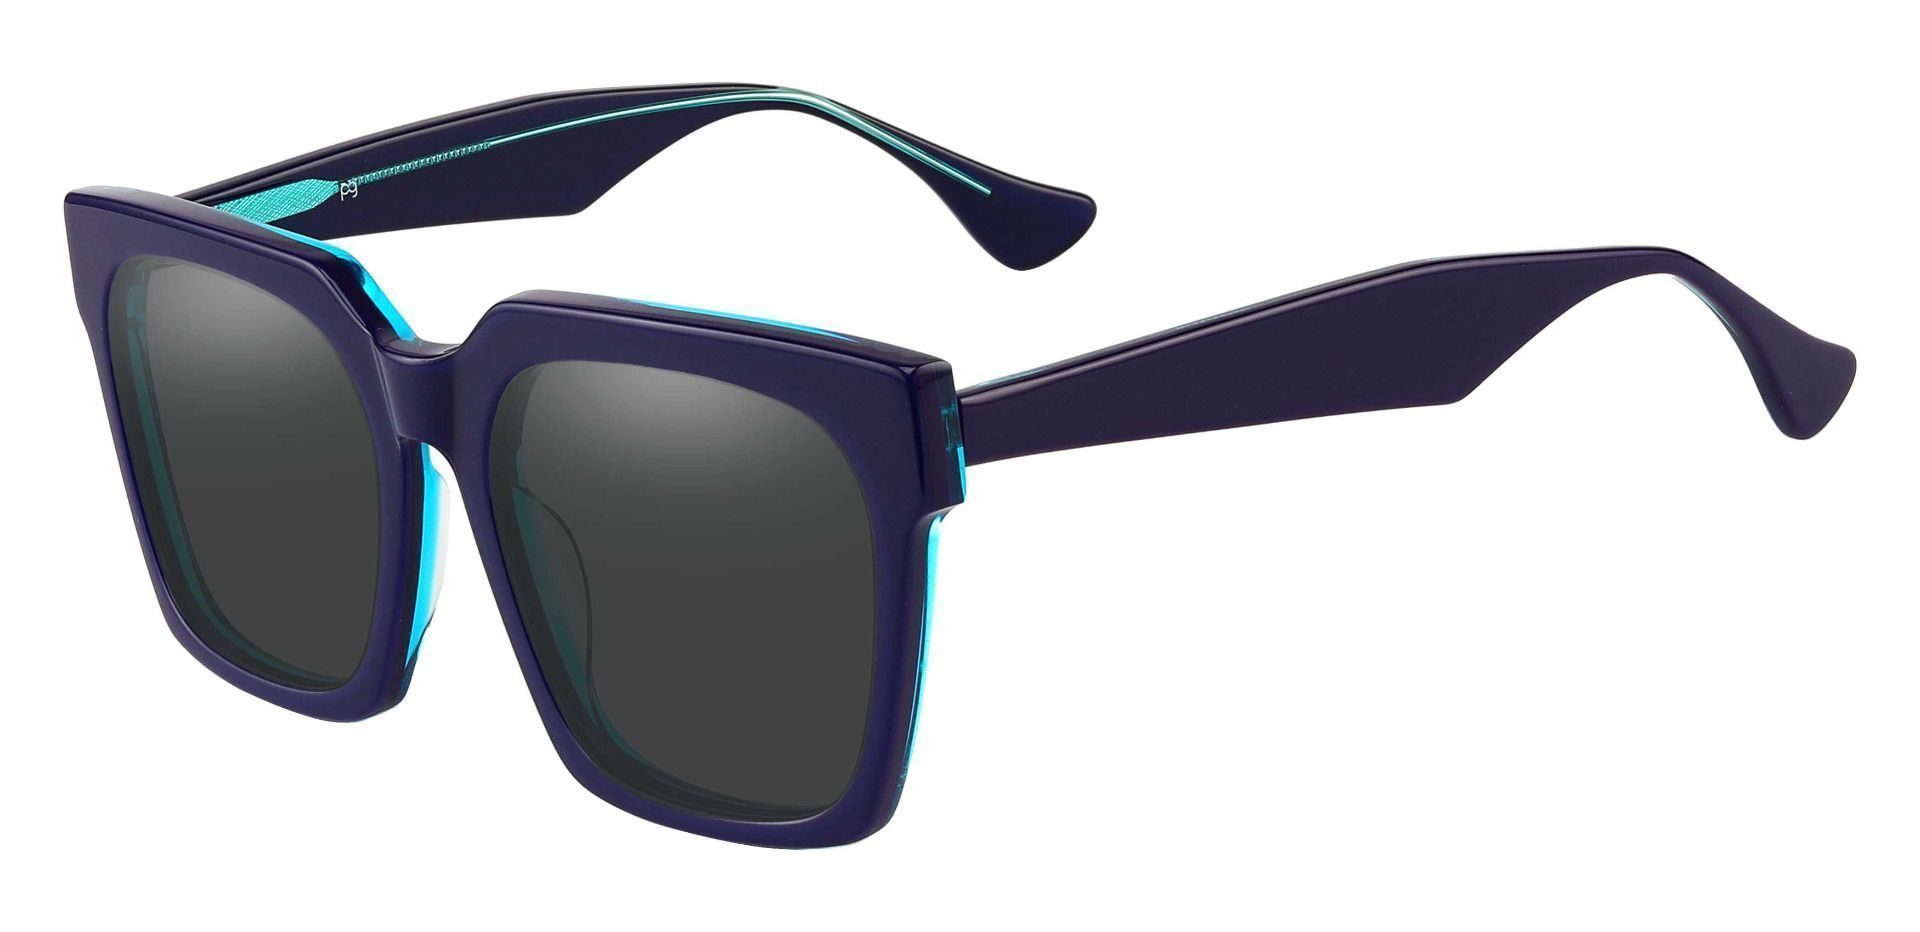 Harlan Square Prescription Sunglasses - Blue Frame With Gray Lenses